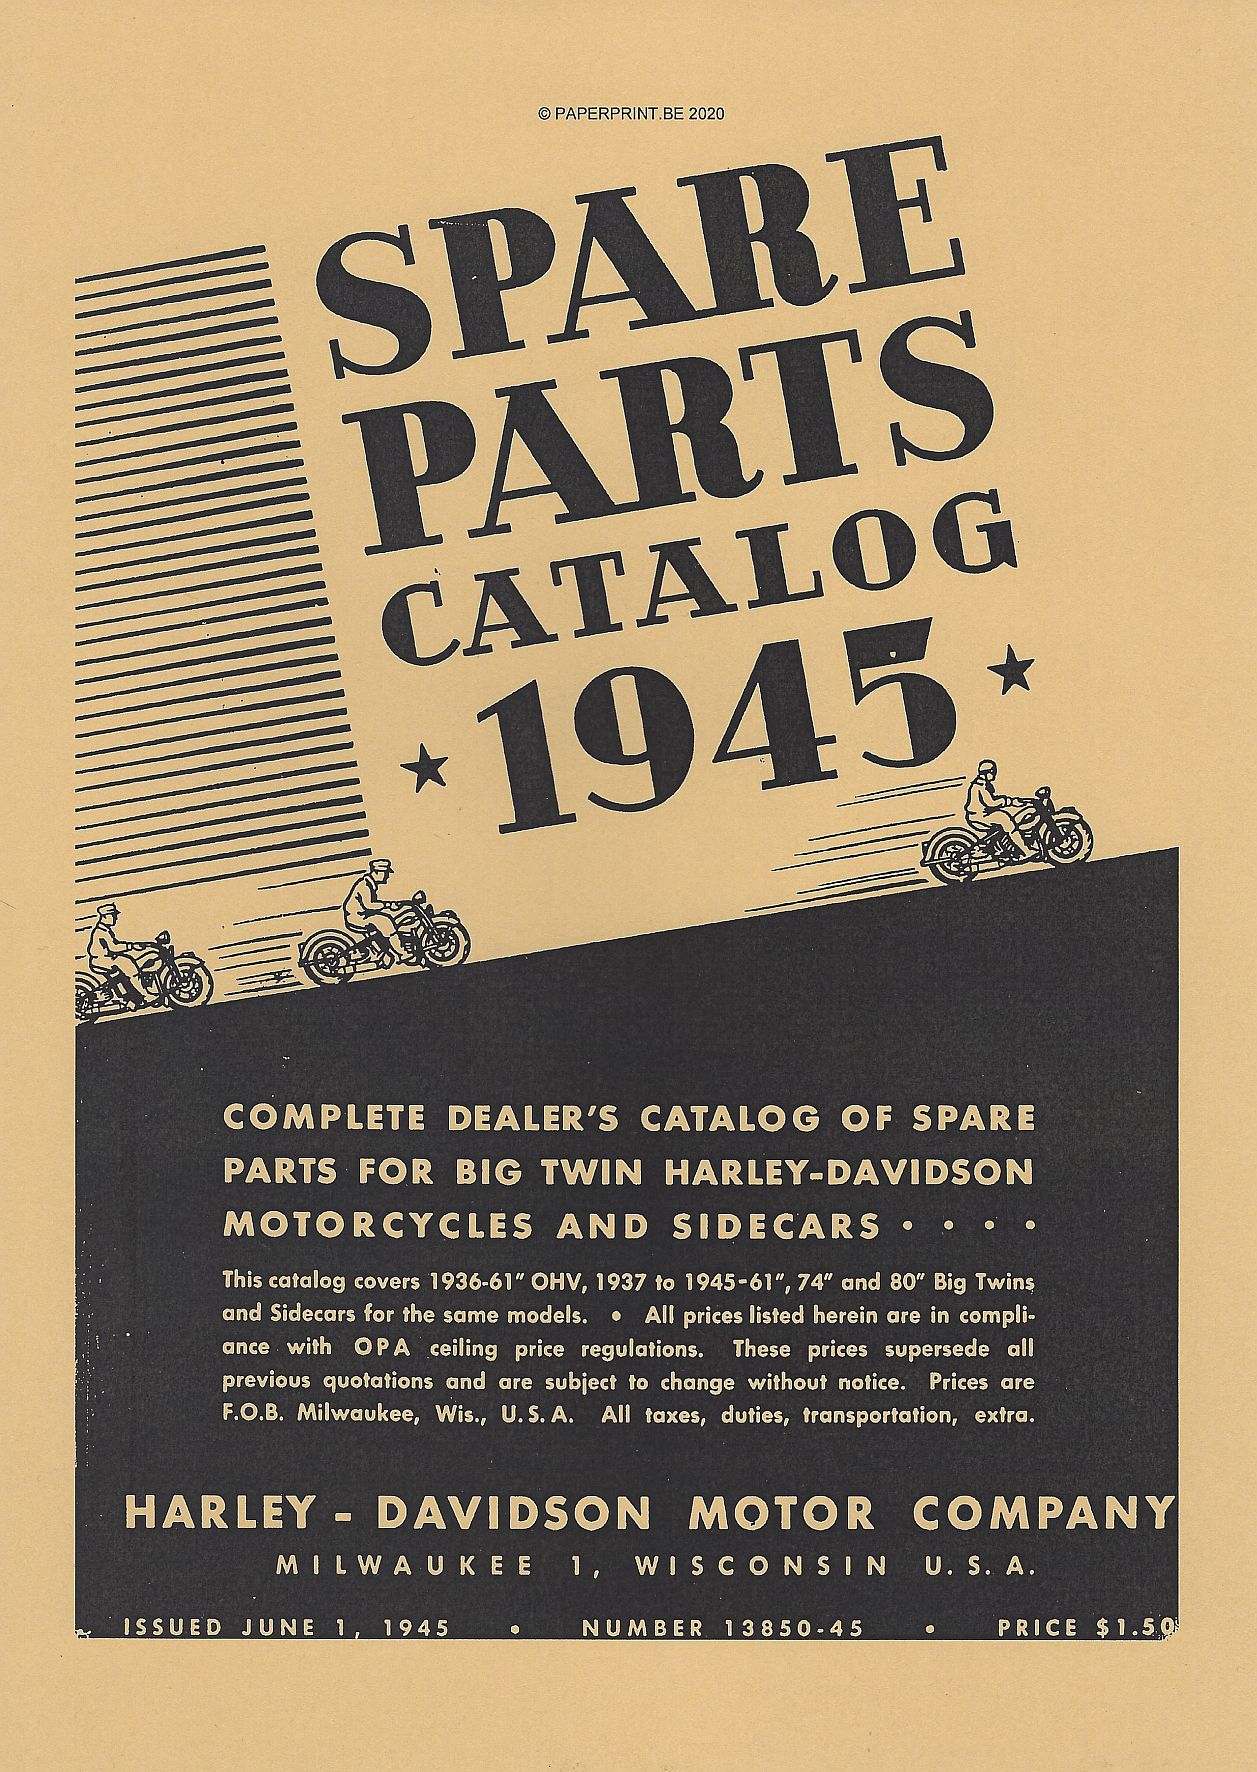 HARLEY-DAVIDSON SPARE PARTS CATALOG 1945